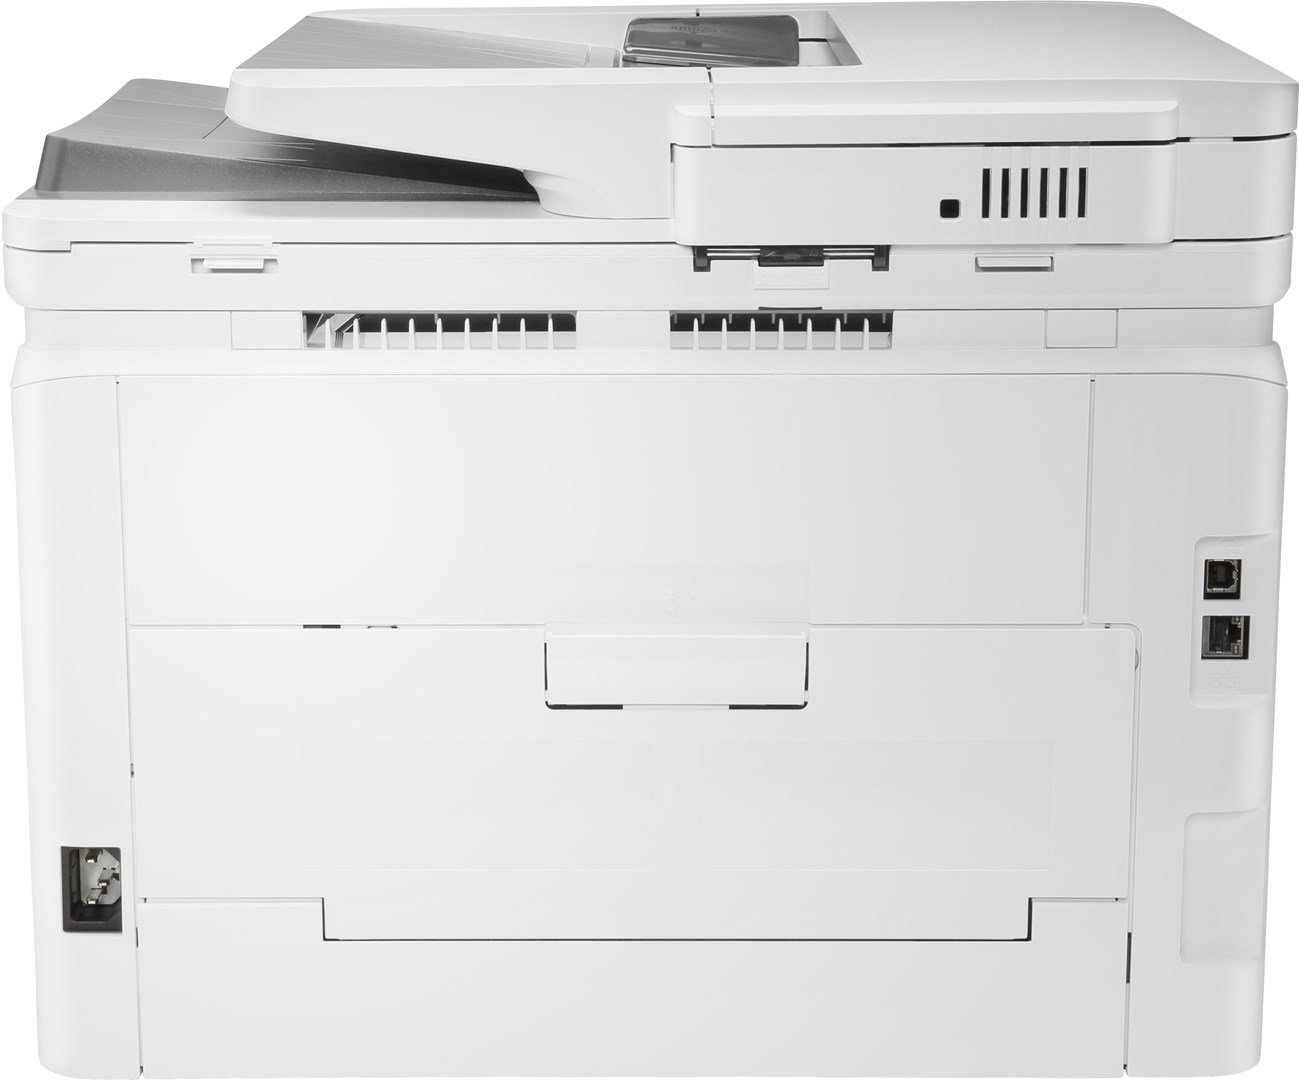 Daugiafunkcis spausdintuvas HP LaserJet Pro M282NW - 4